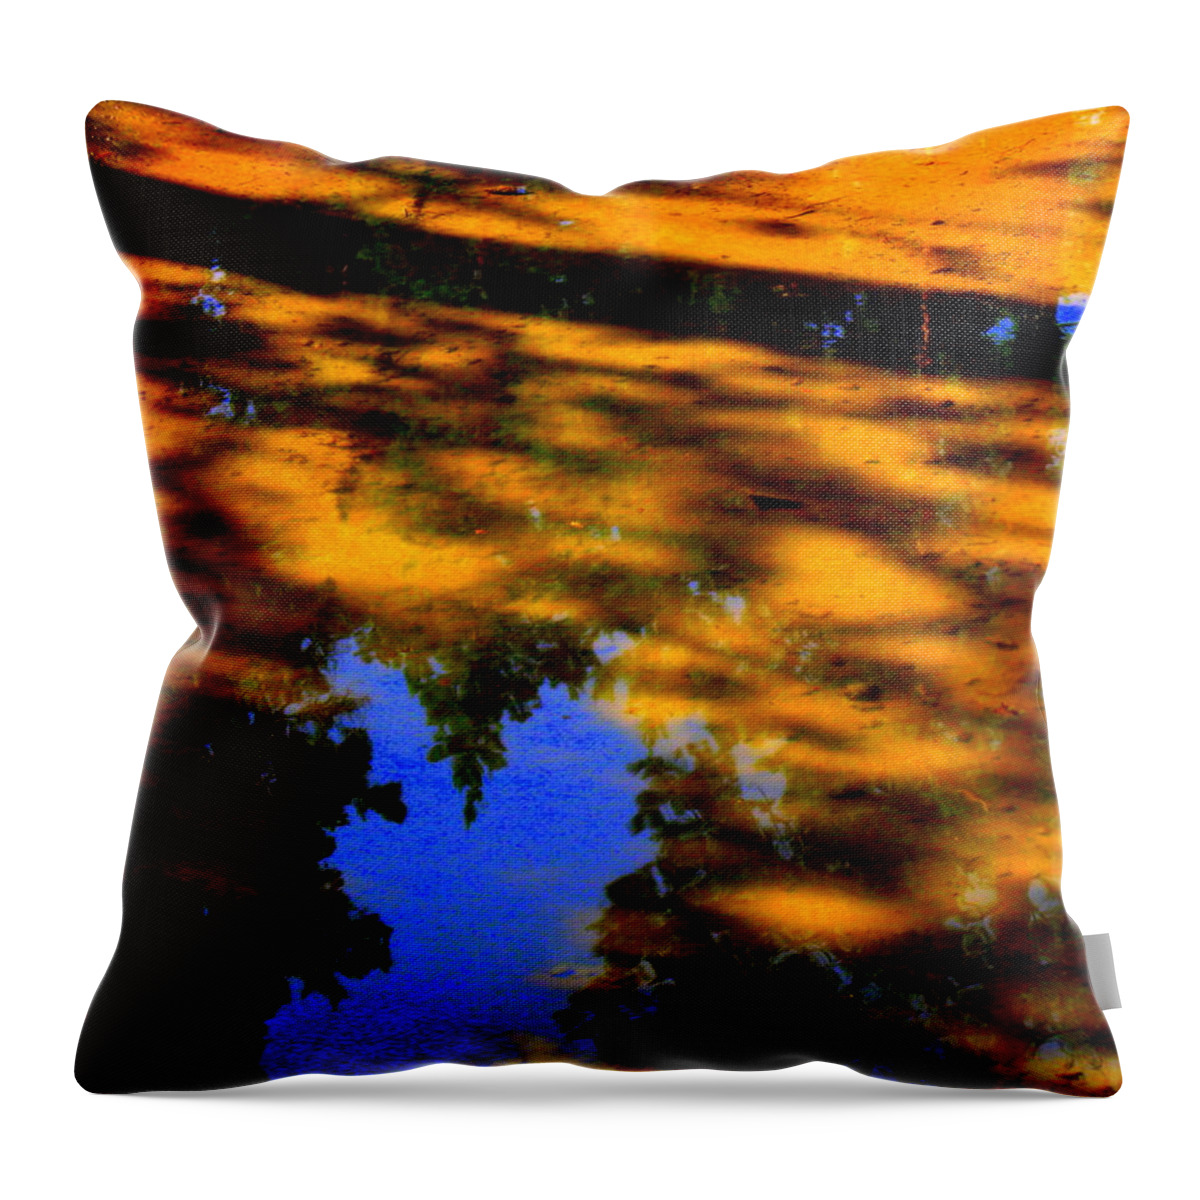 Sunset Throw Pillow featuring the photograph Sunset by Pauli Hyvonen